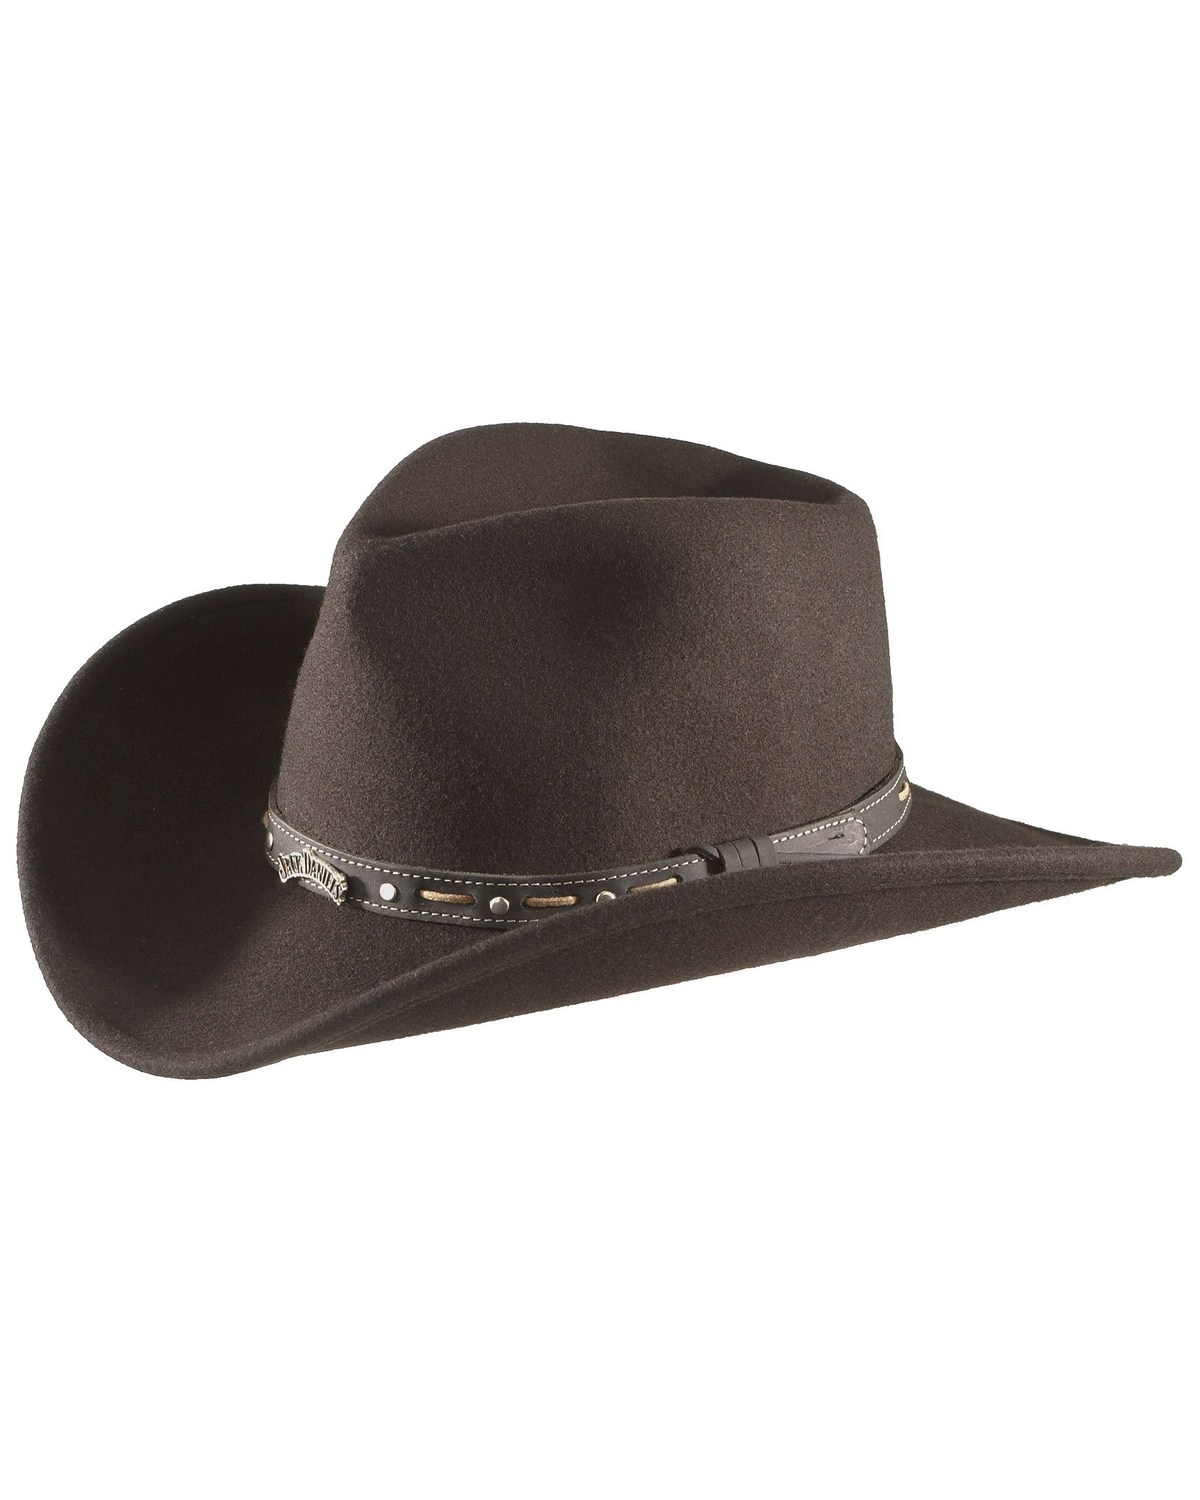 Jack Daniel's Men's Crushable Felt Western Fashion Hat